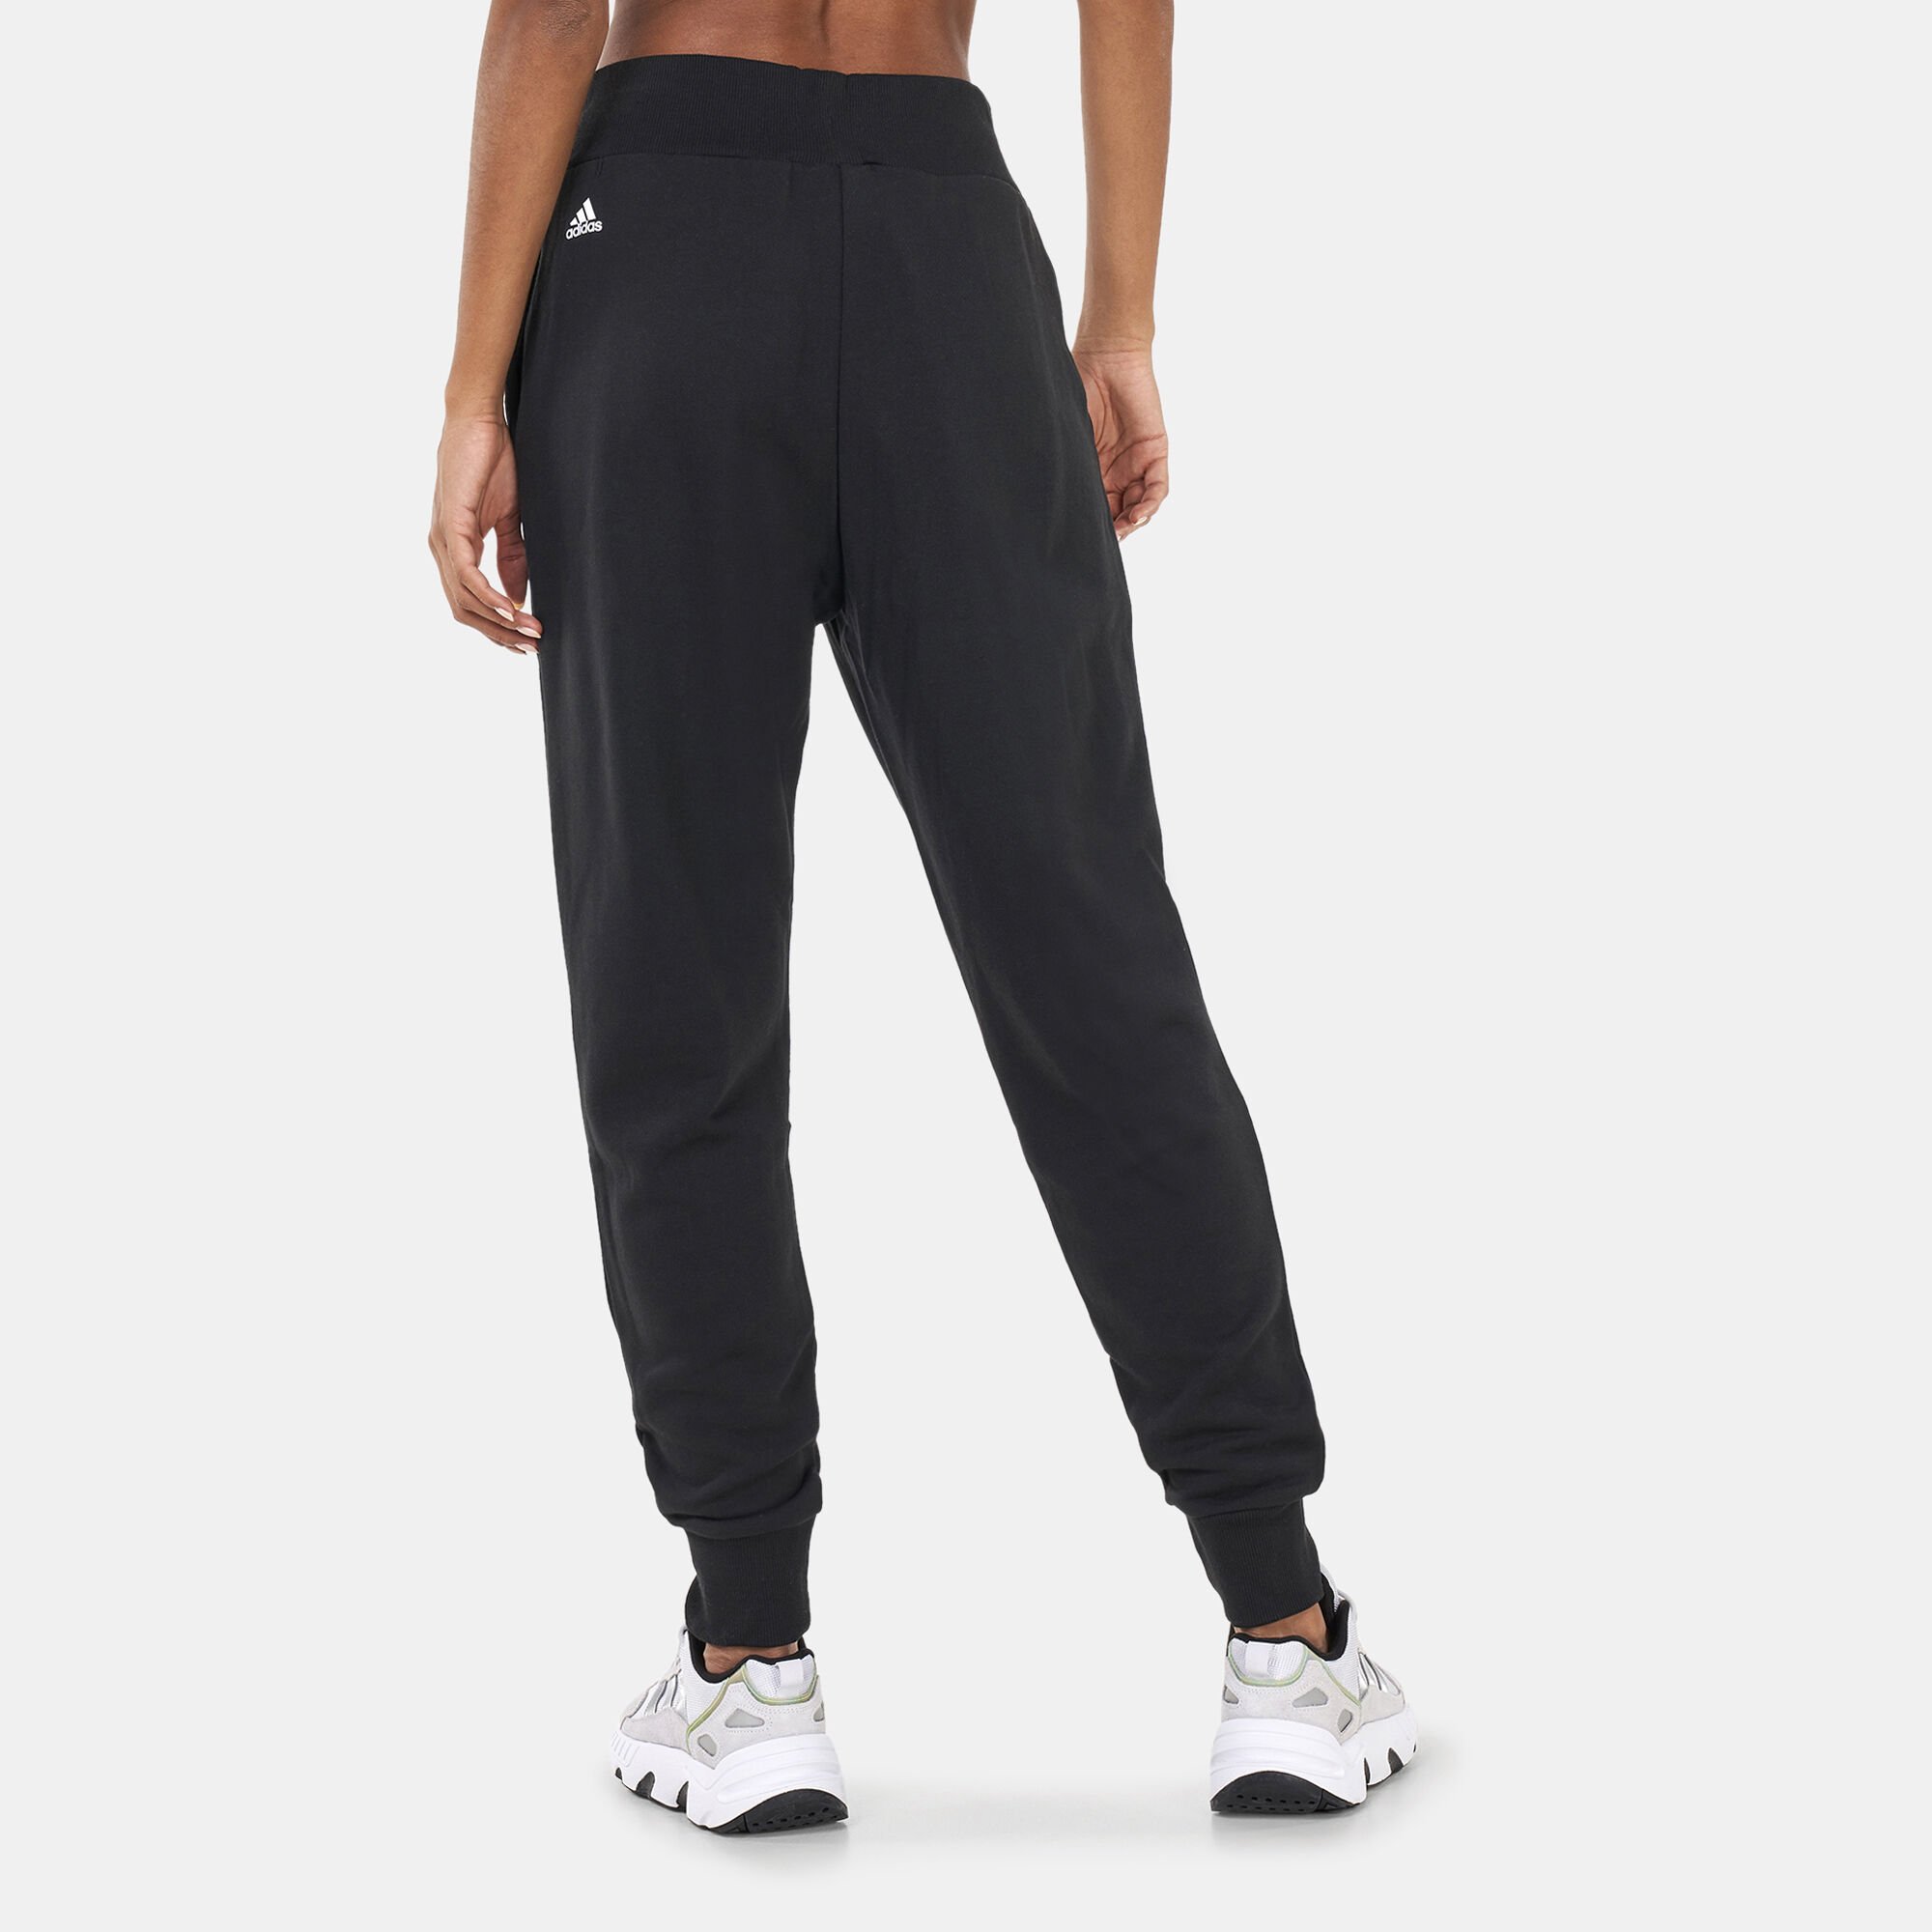 Jogging Half Pants Shorts Solid Color Fitness Pants Casual Summer Pocket  Womens | eBay